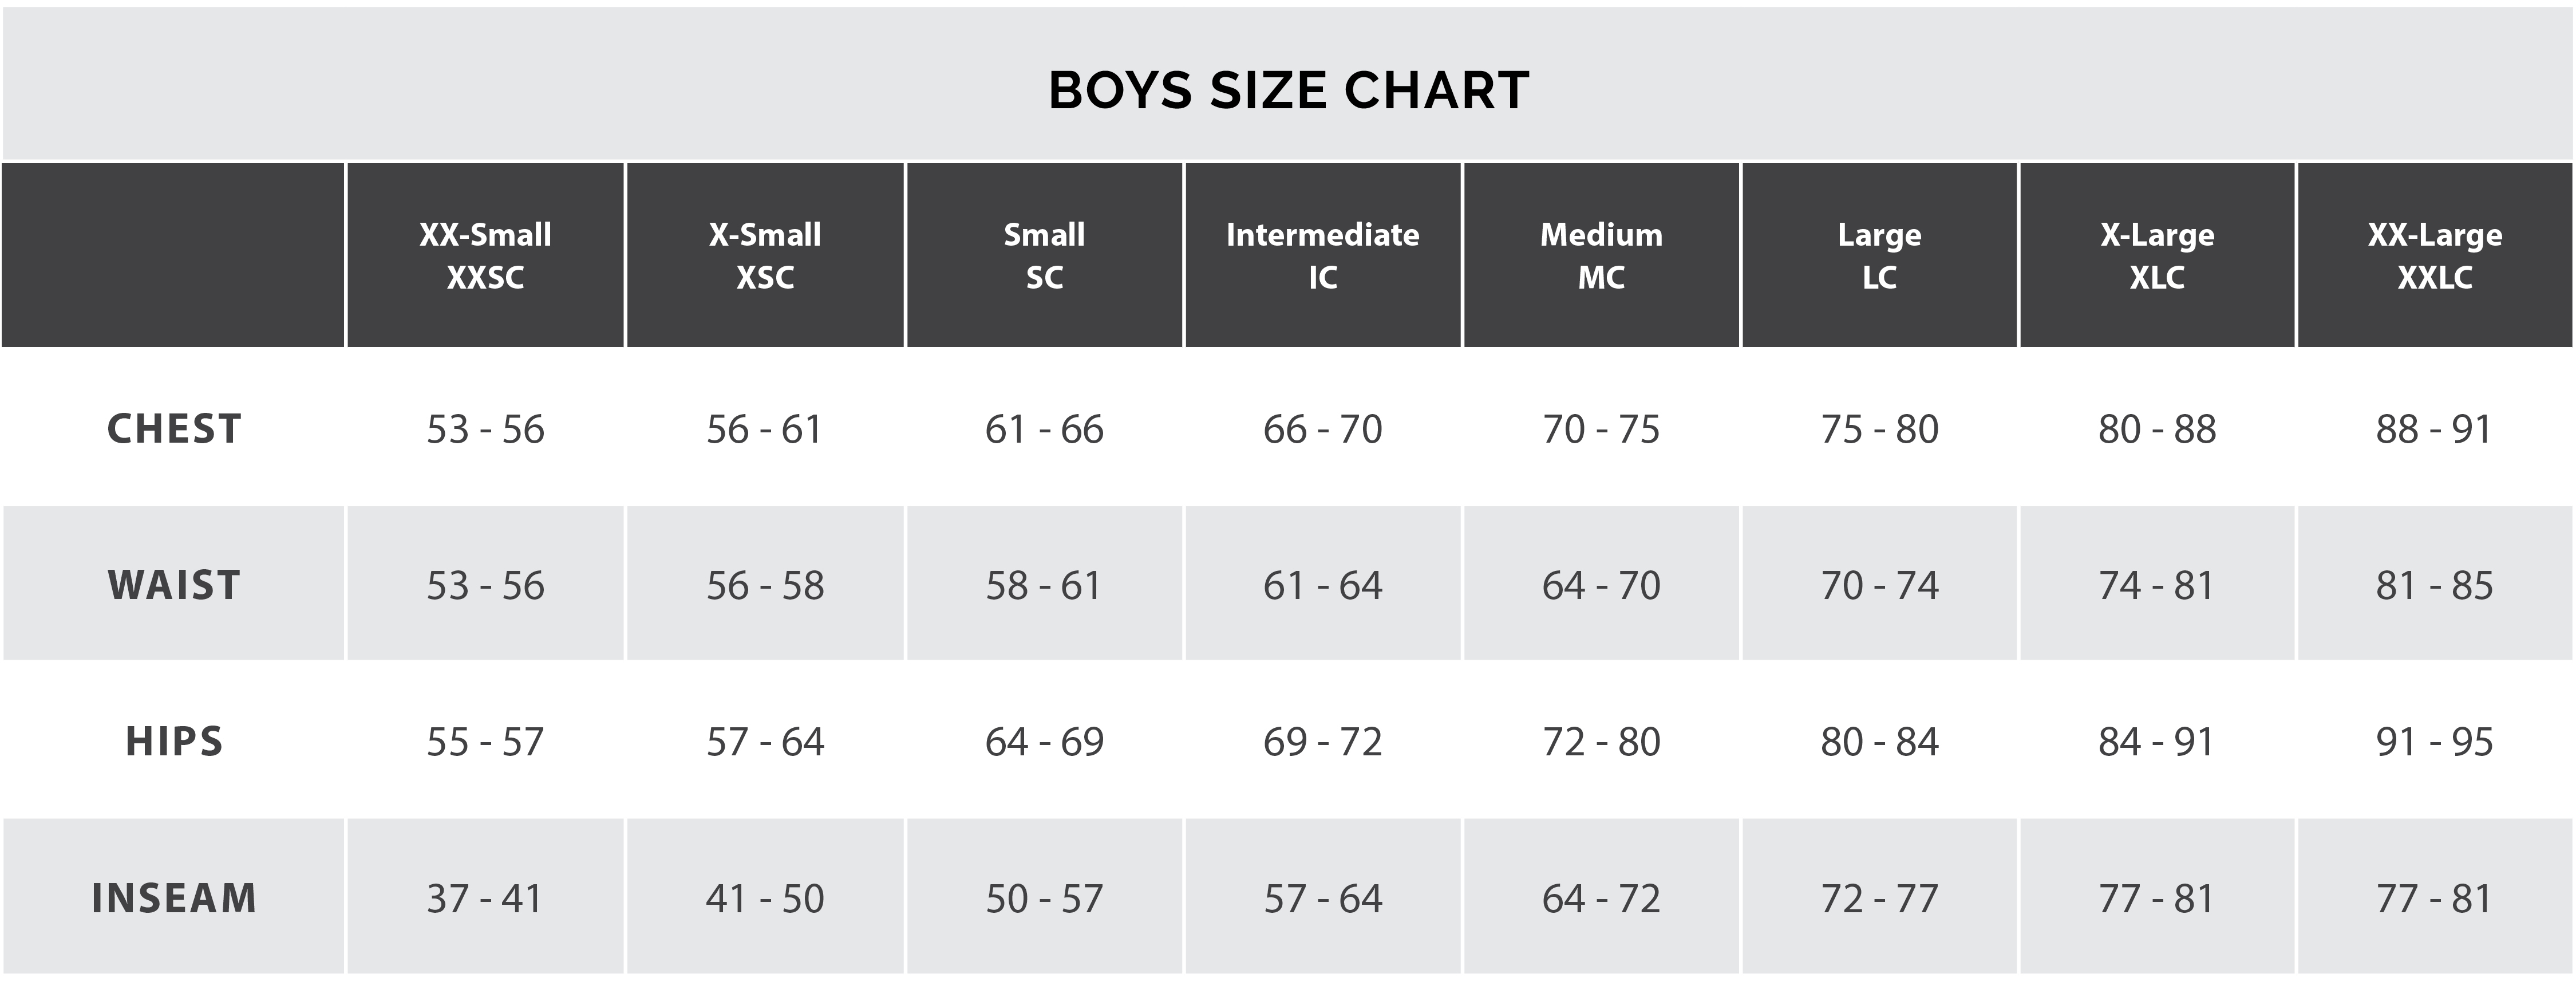 child boys size chart centimeters